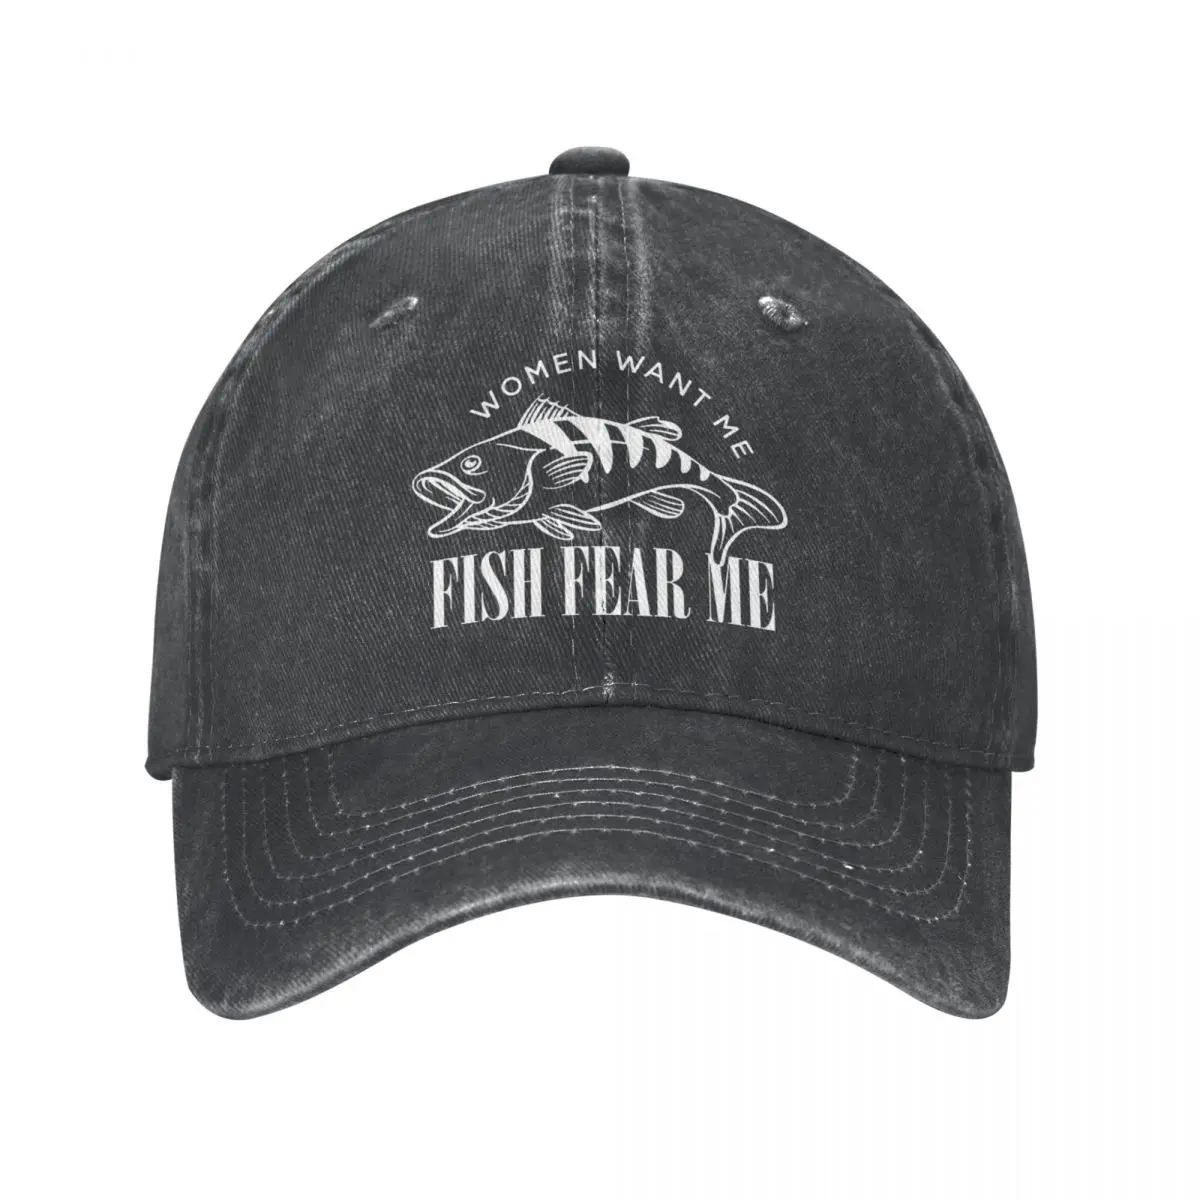 

Women Want Me Fish Fear Me Baseball Cap Distressed Denim Meme Headwear Men Women Outdoor Activities Adjustable Fit Caps Hat